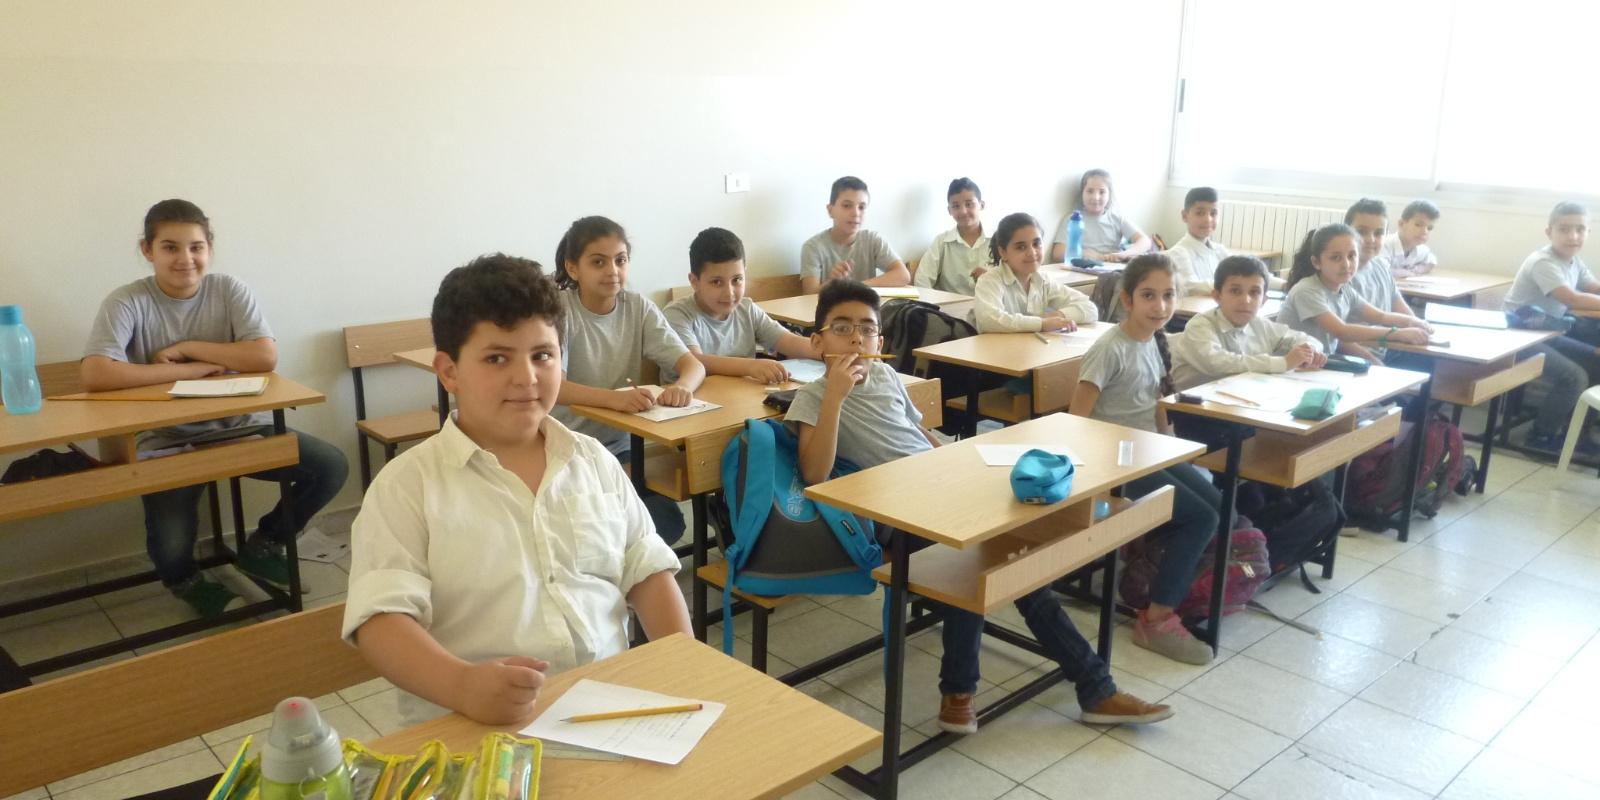 Schule in Libanon